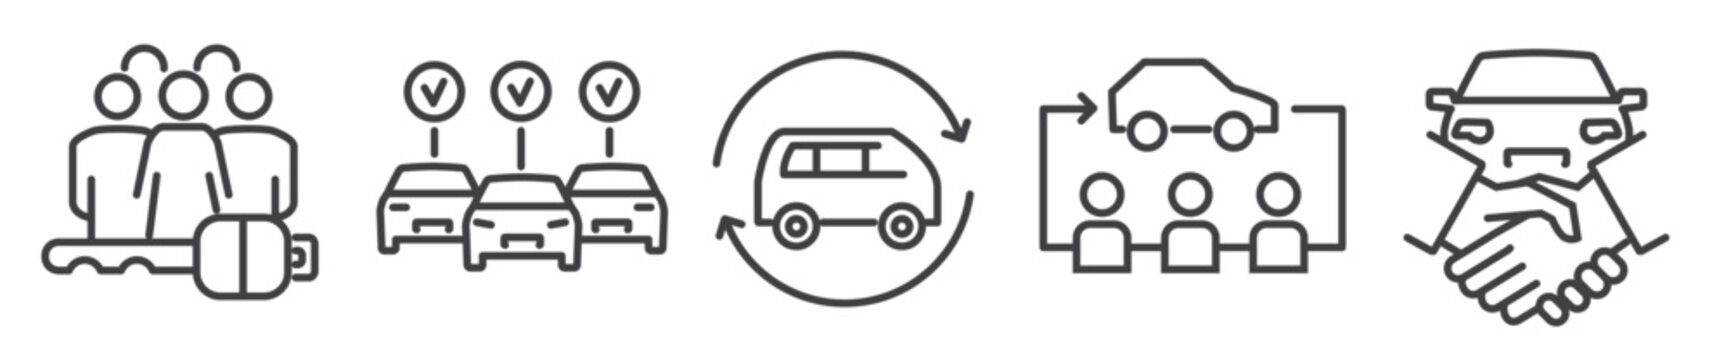 Carsharing and carpool - Thine Line Icon Set on white background